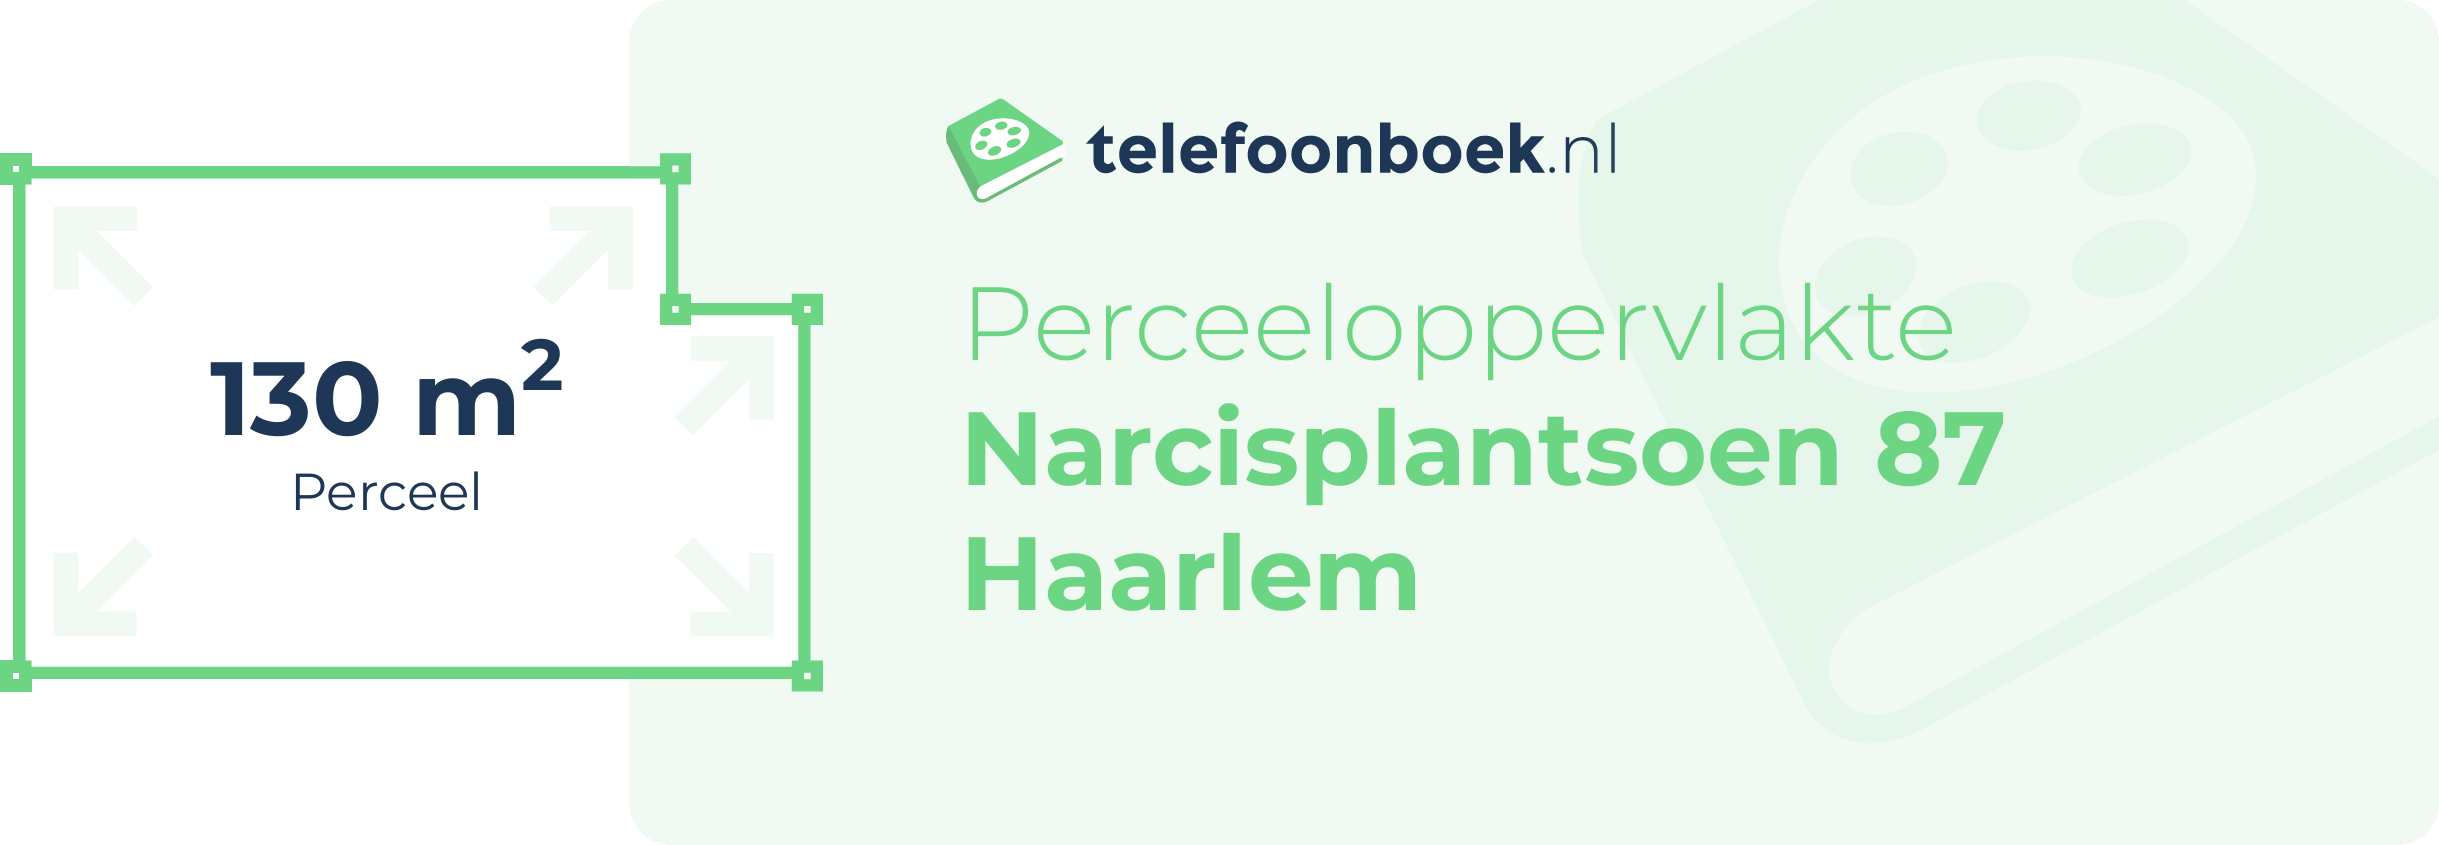 Perceeloppervlakte Narcisplantsoen 87 Haarlem